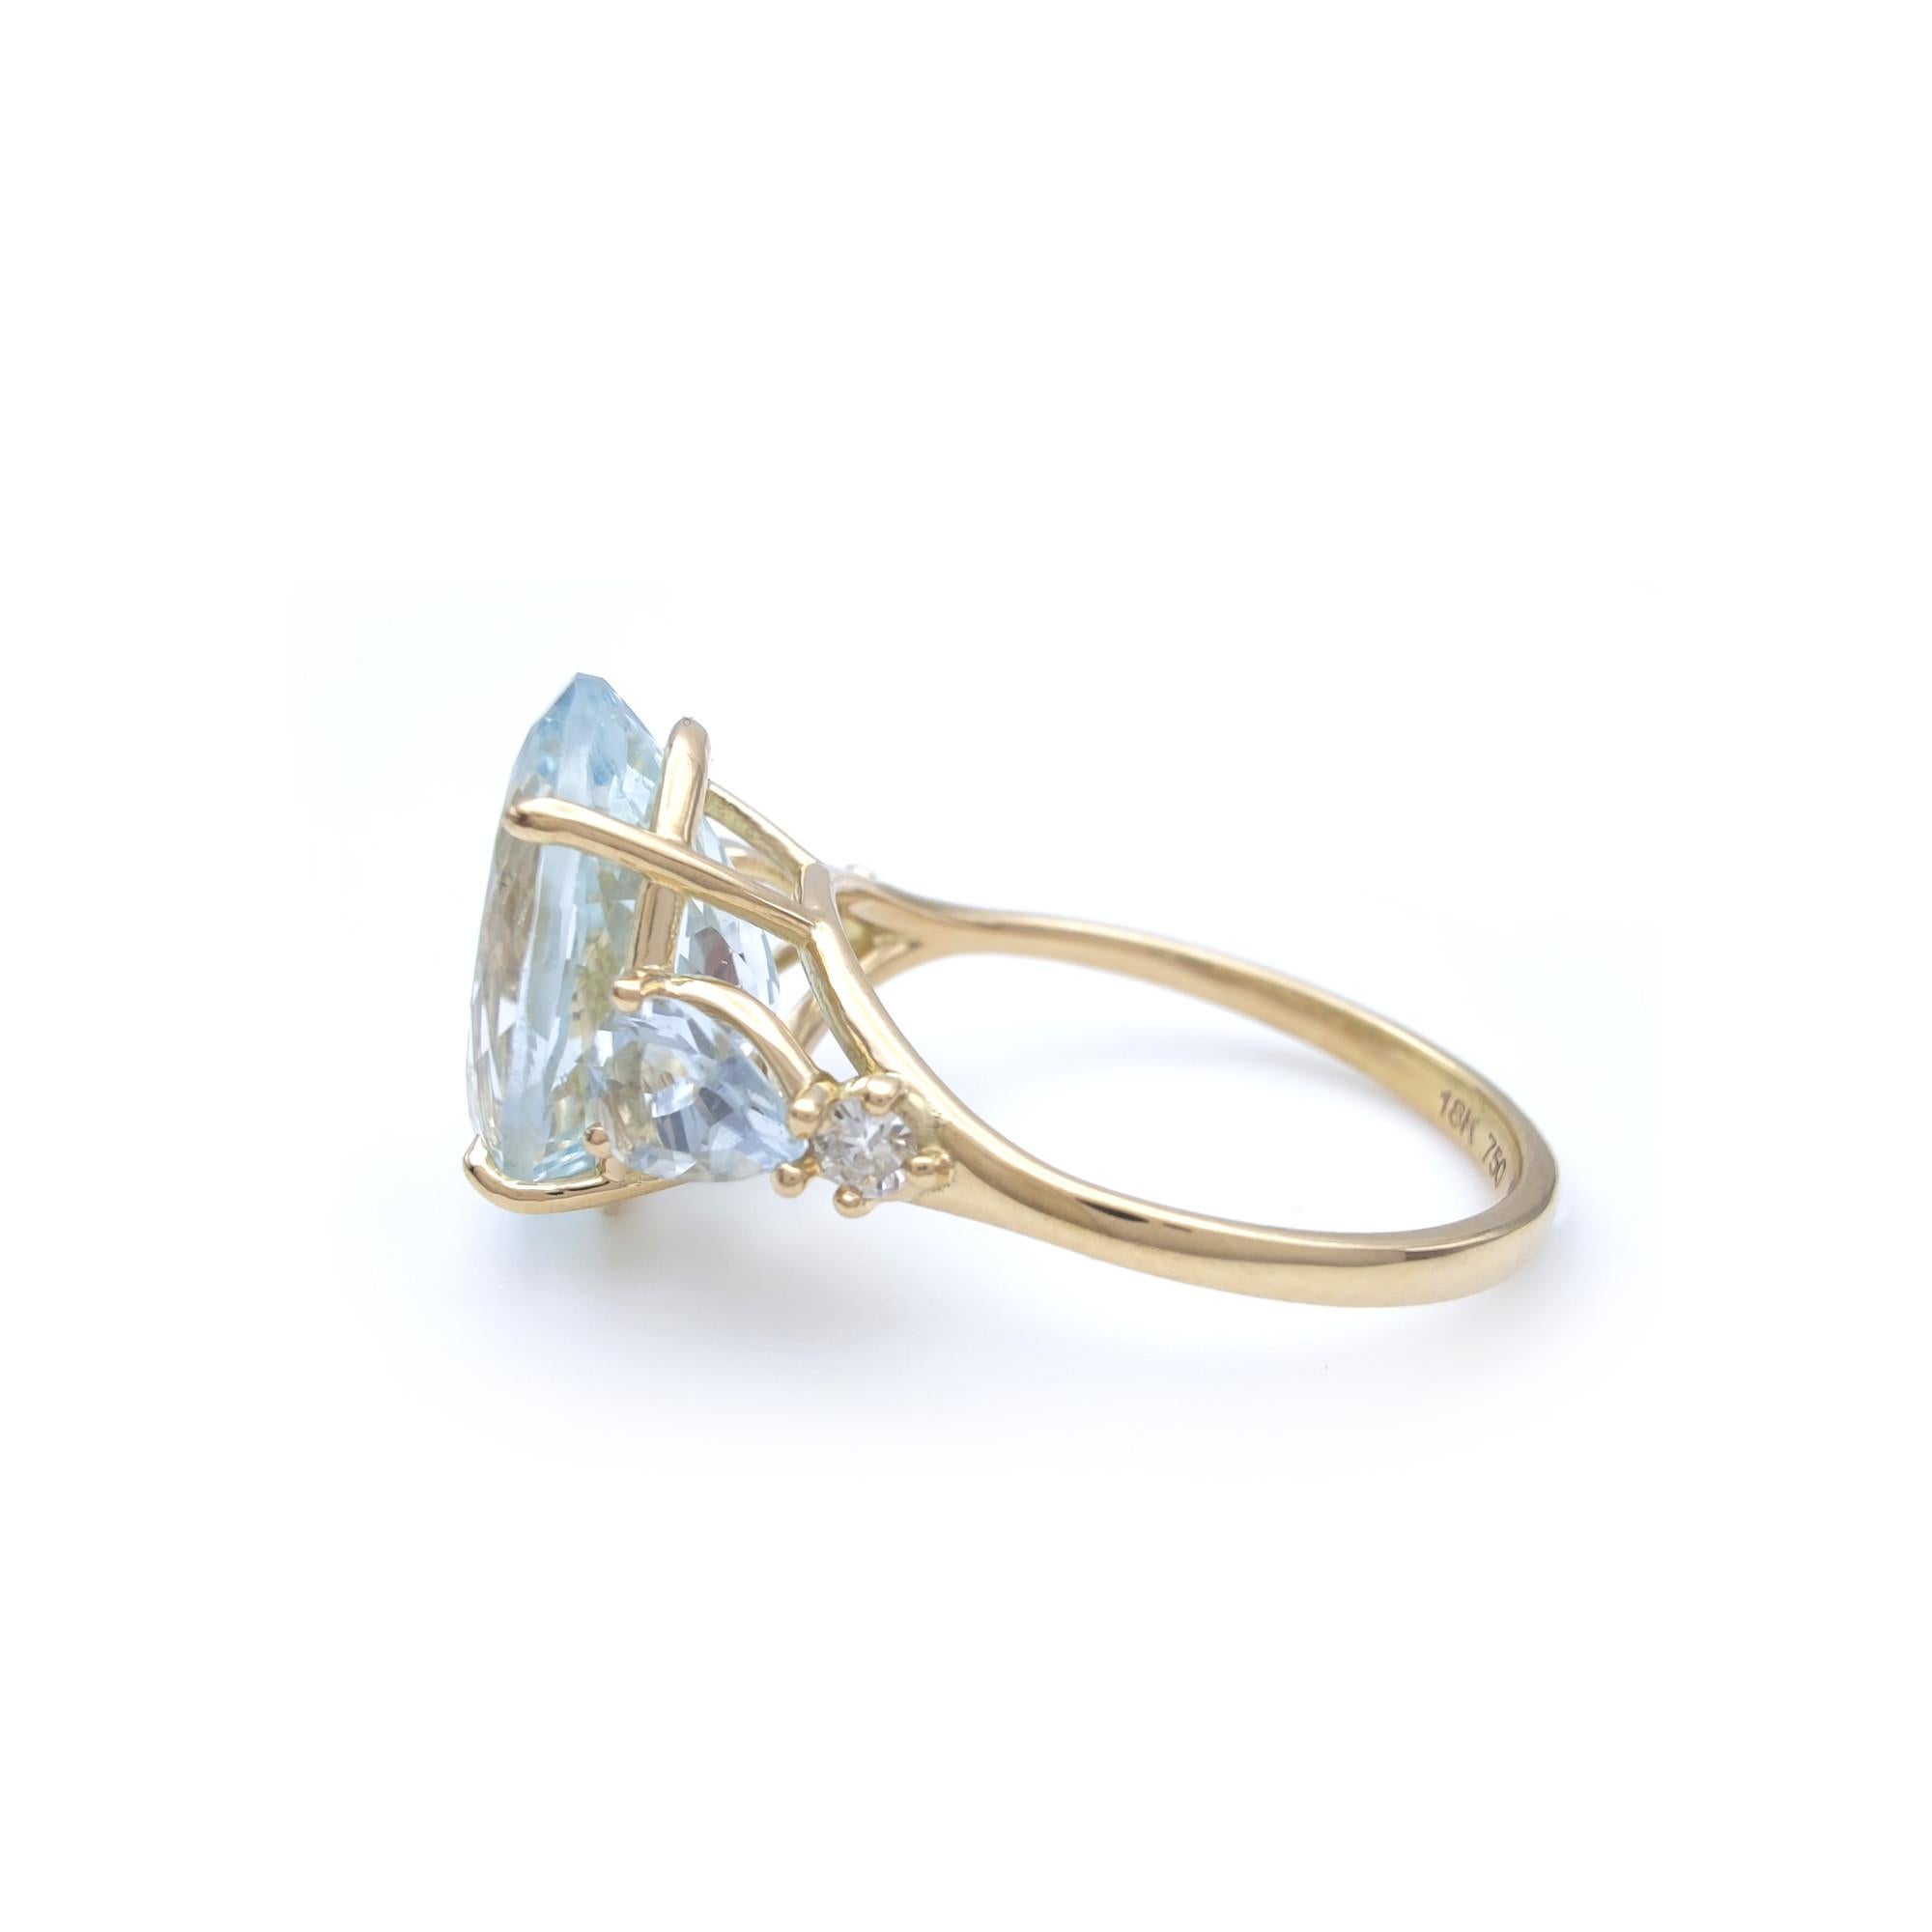 4.3ct  Oval Cut  Aquamarine  Ring, 18k Yellow Gold, with diamonds  3